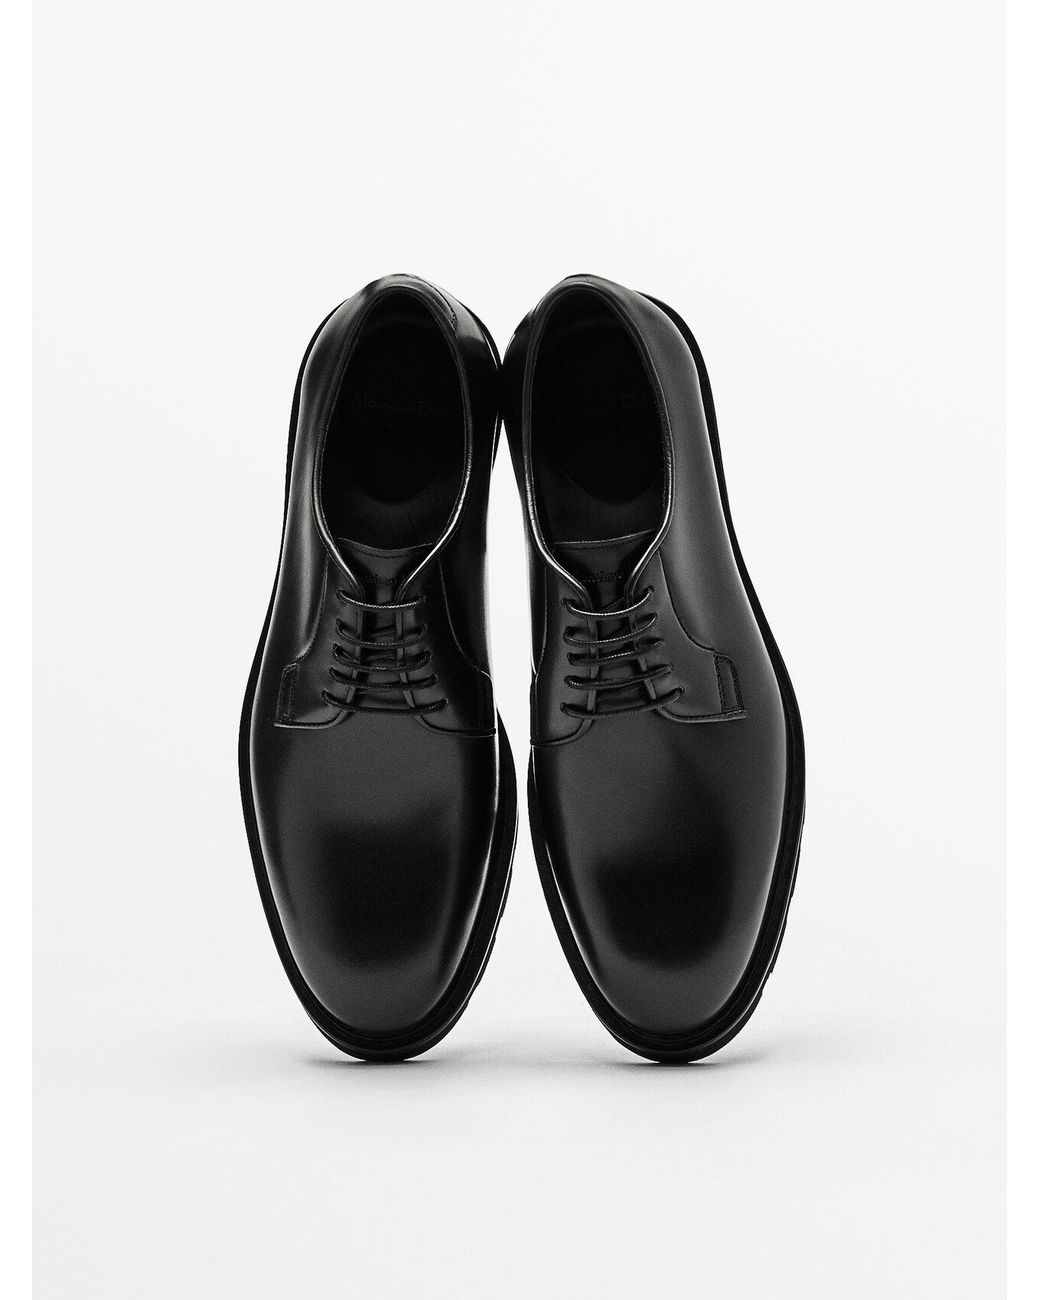 Sevilla model shoe, made of black Napa and black polka dot nappa